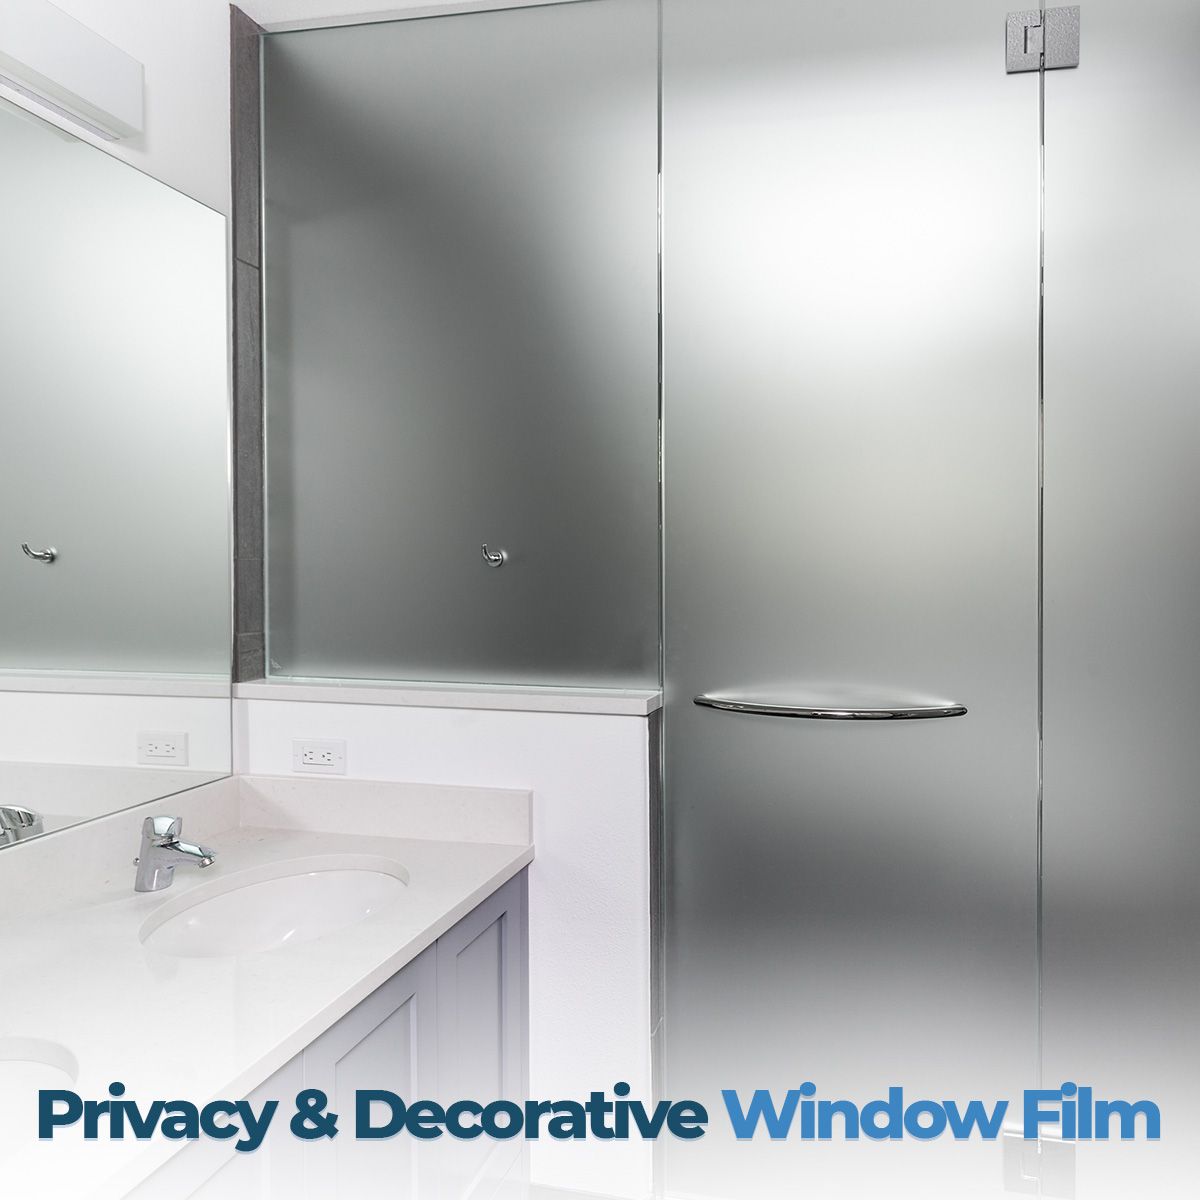 Privacy & Decorative Window Film